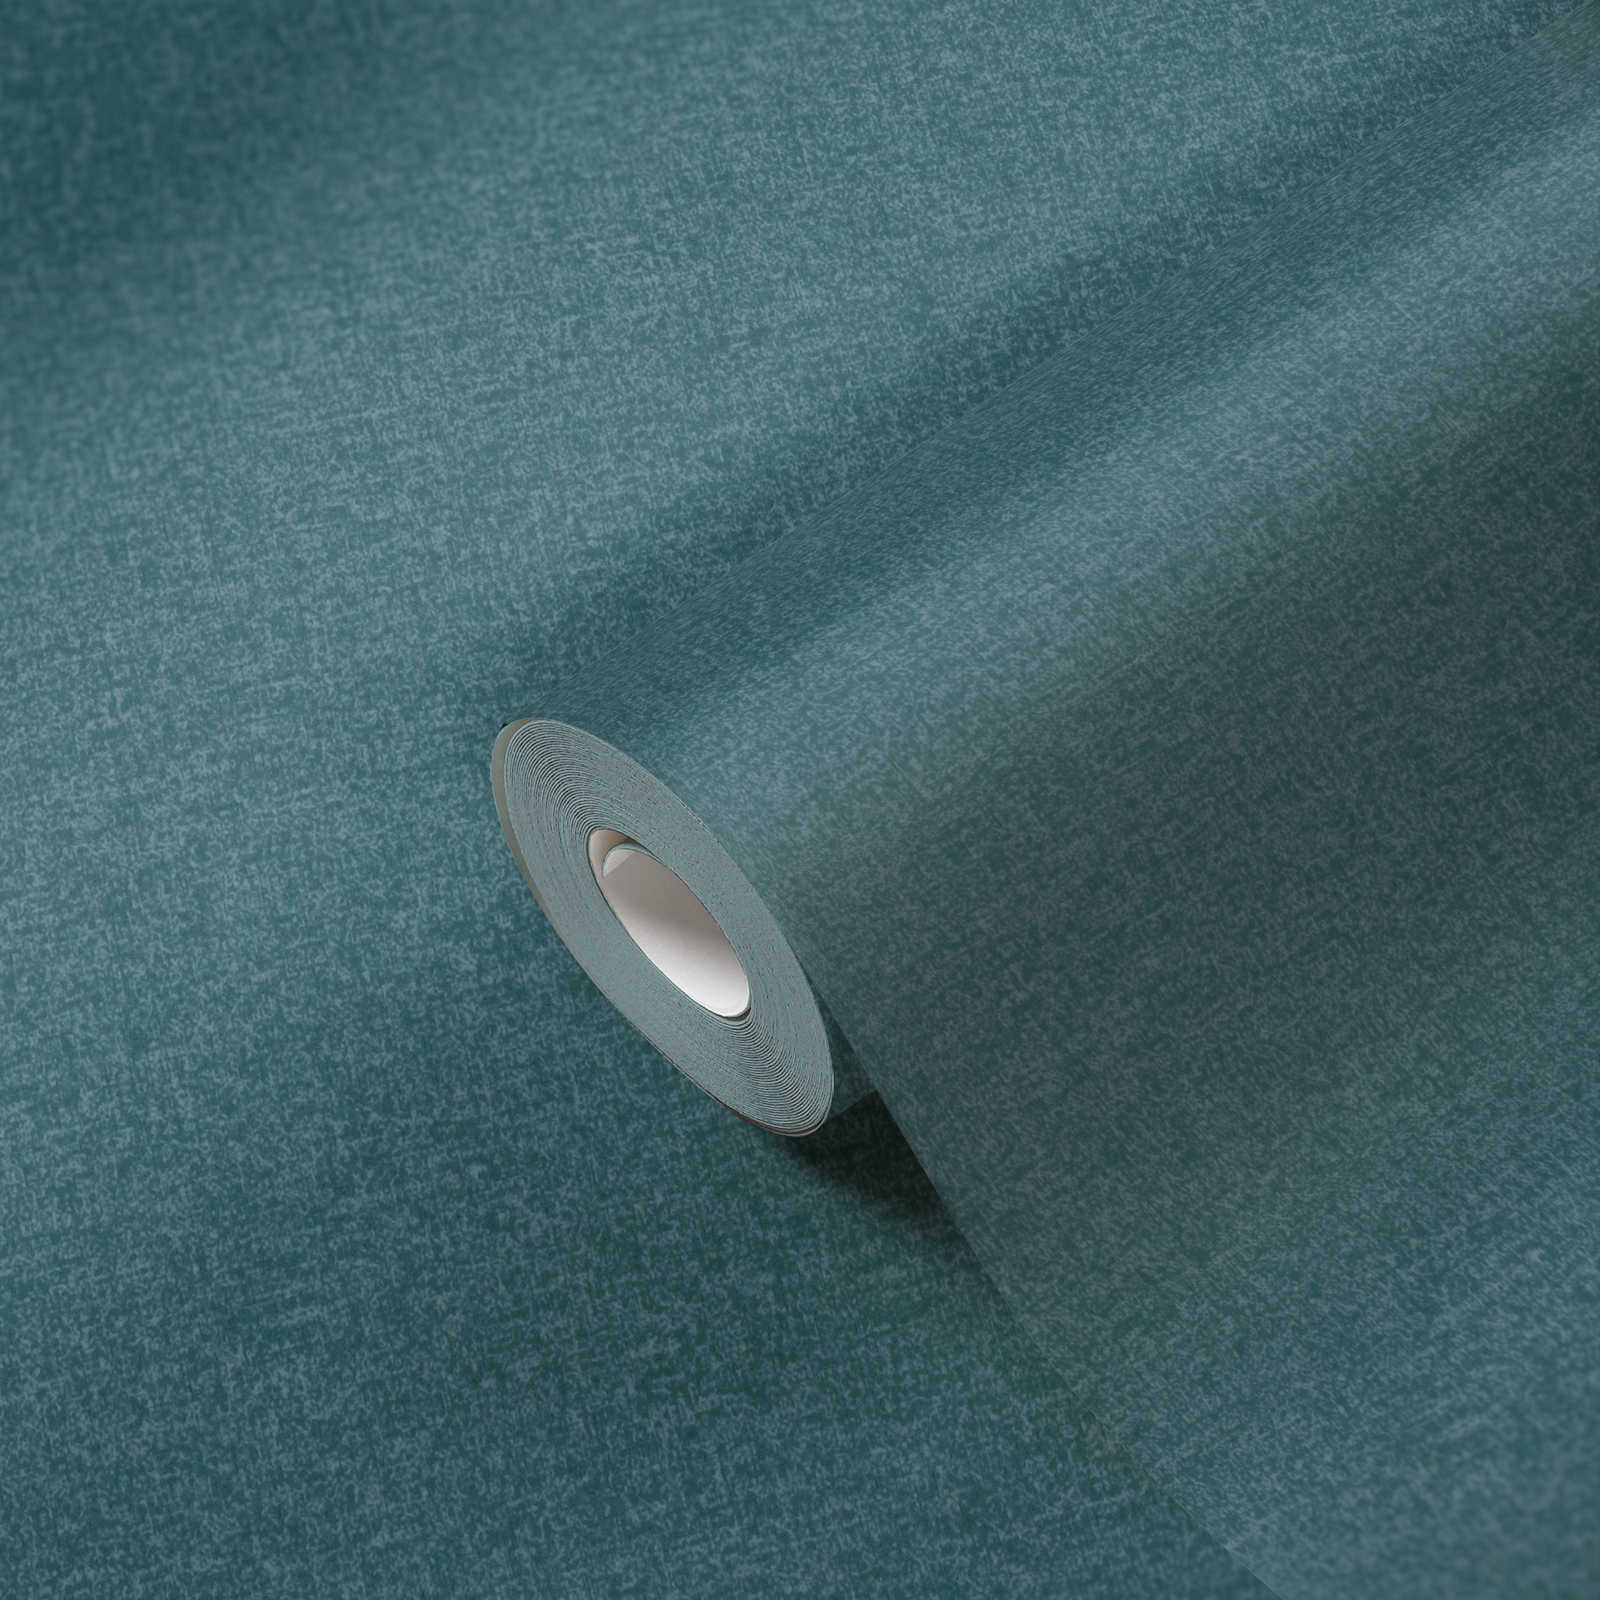             Non-woven wallpaper monochrome in a strong shade - petrol
        